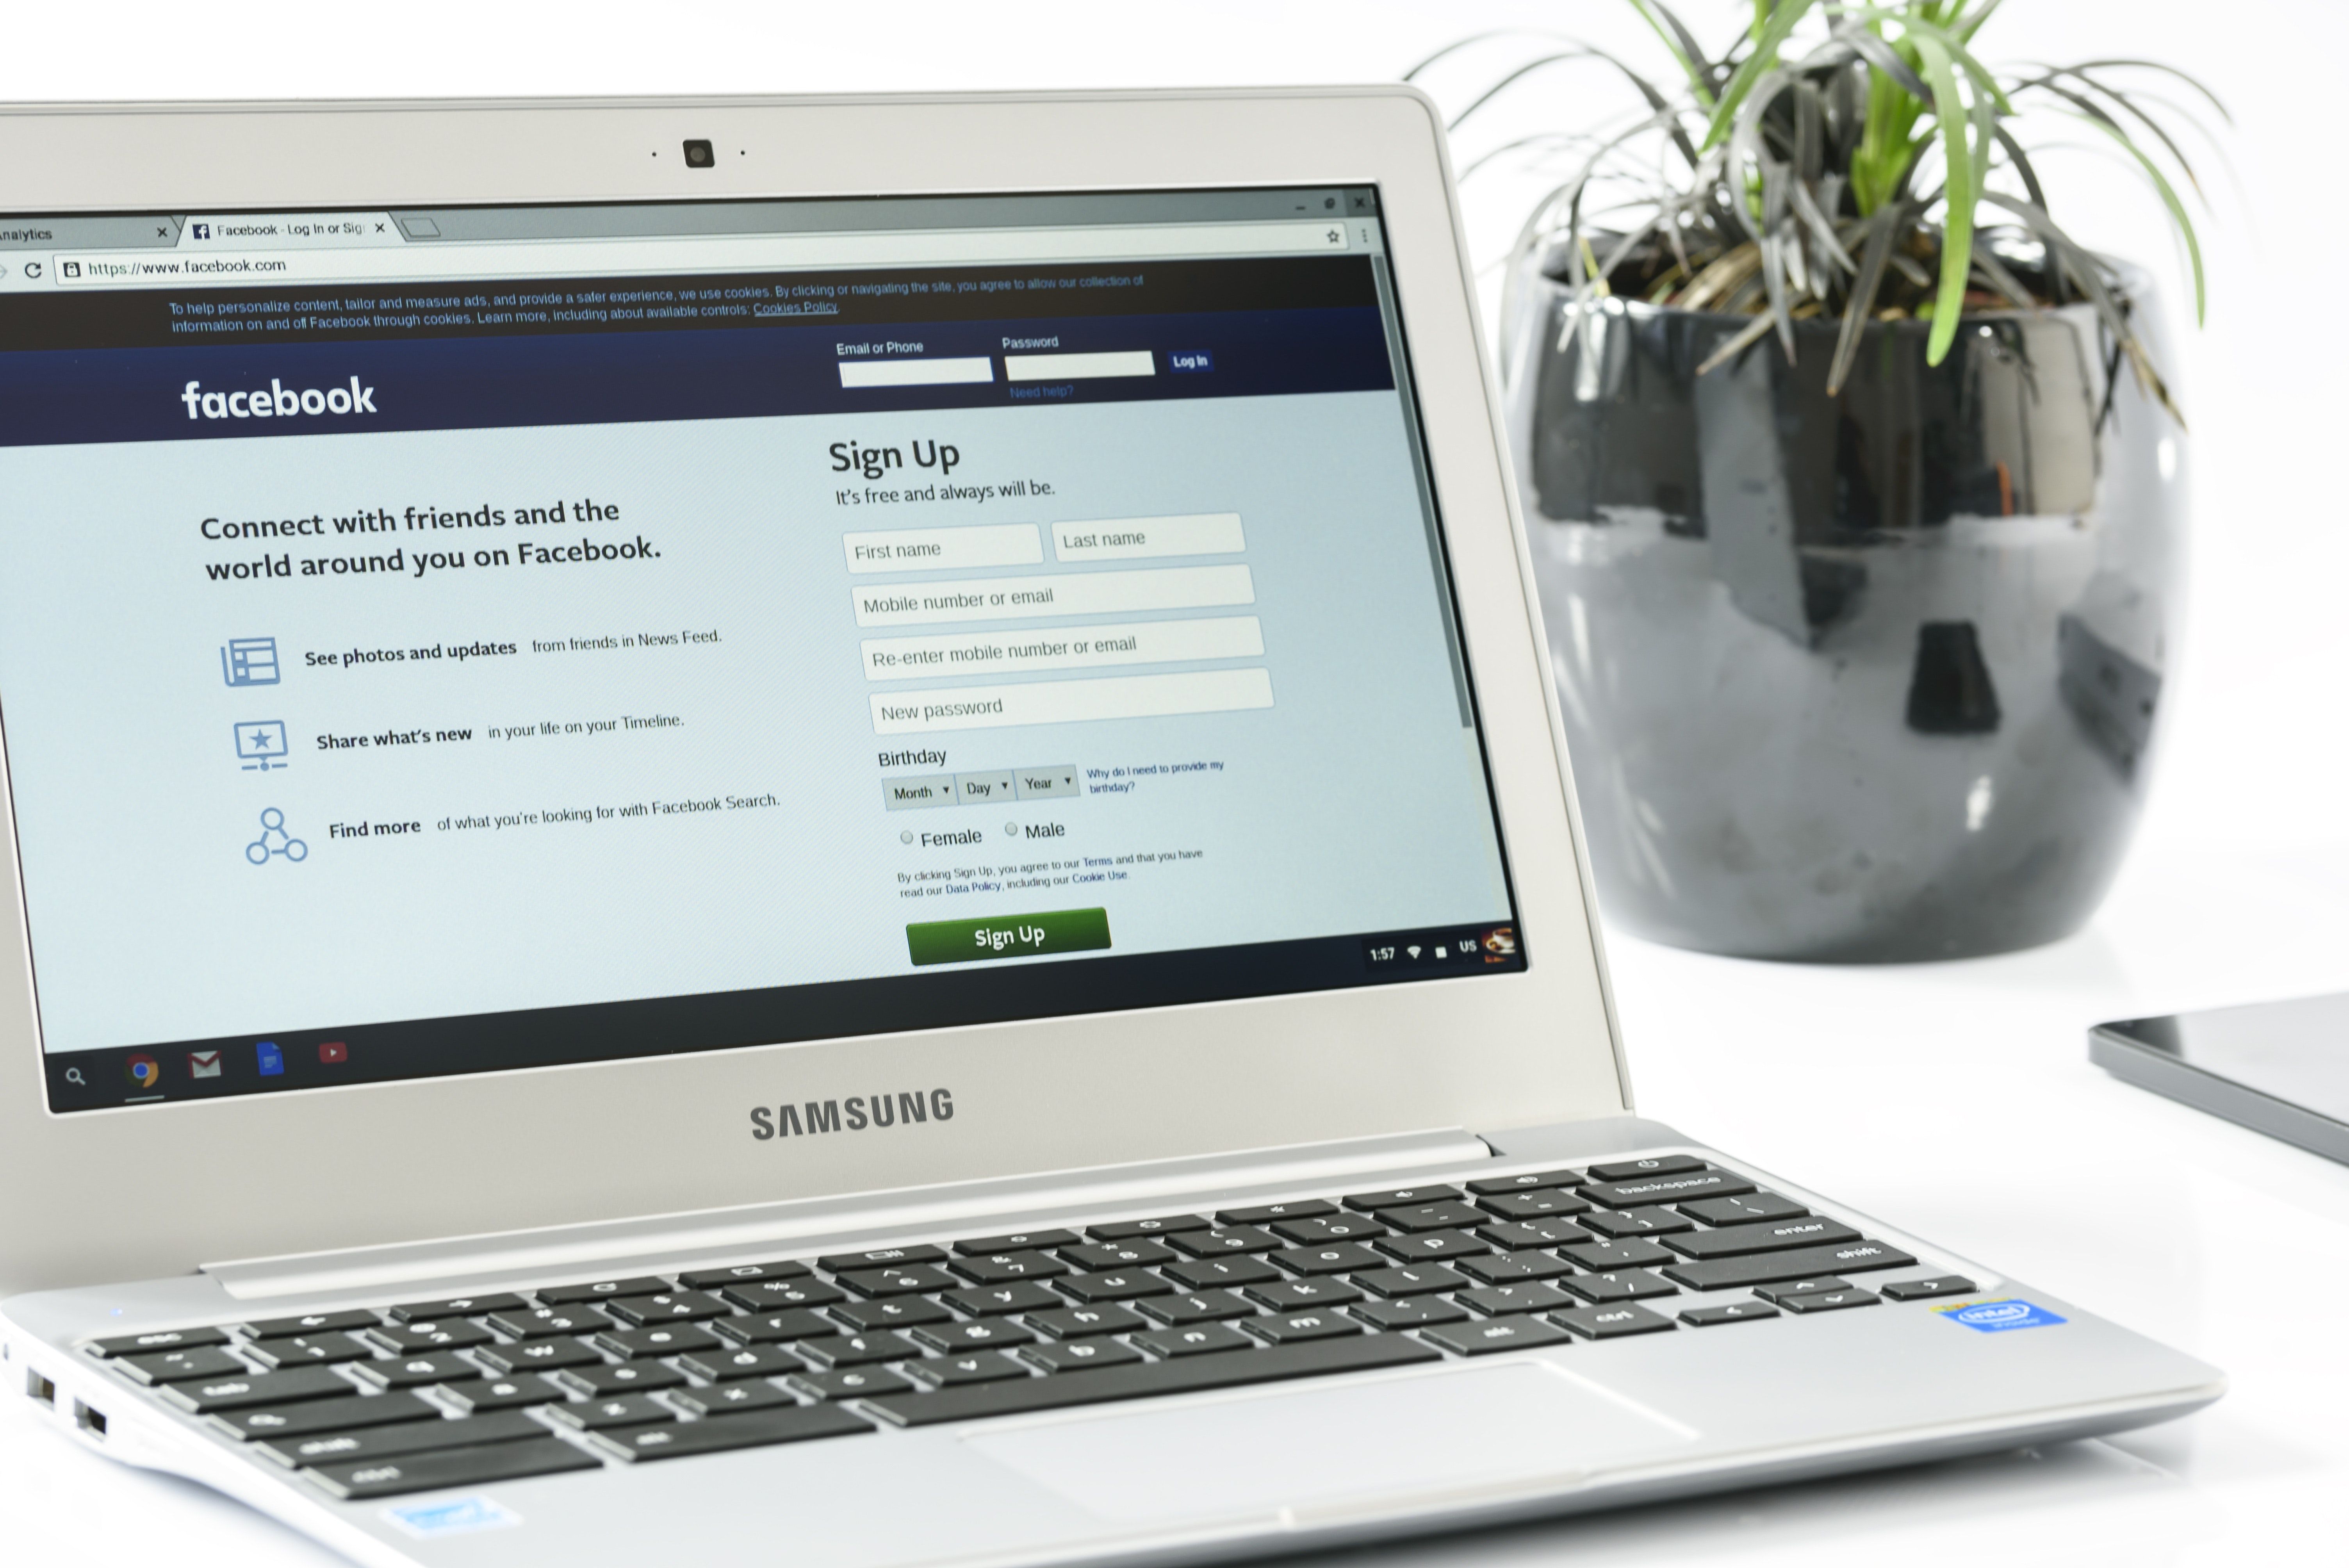 Open laptop showing Facebook's registration page